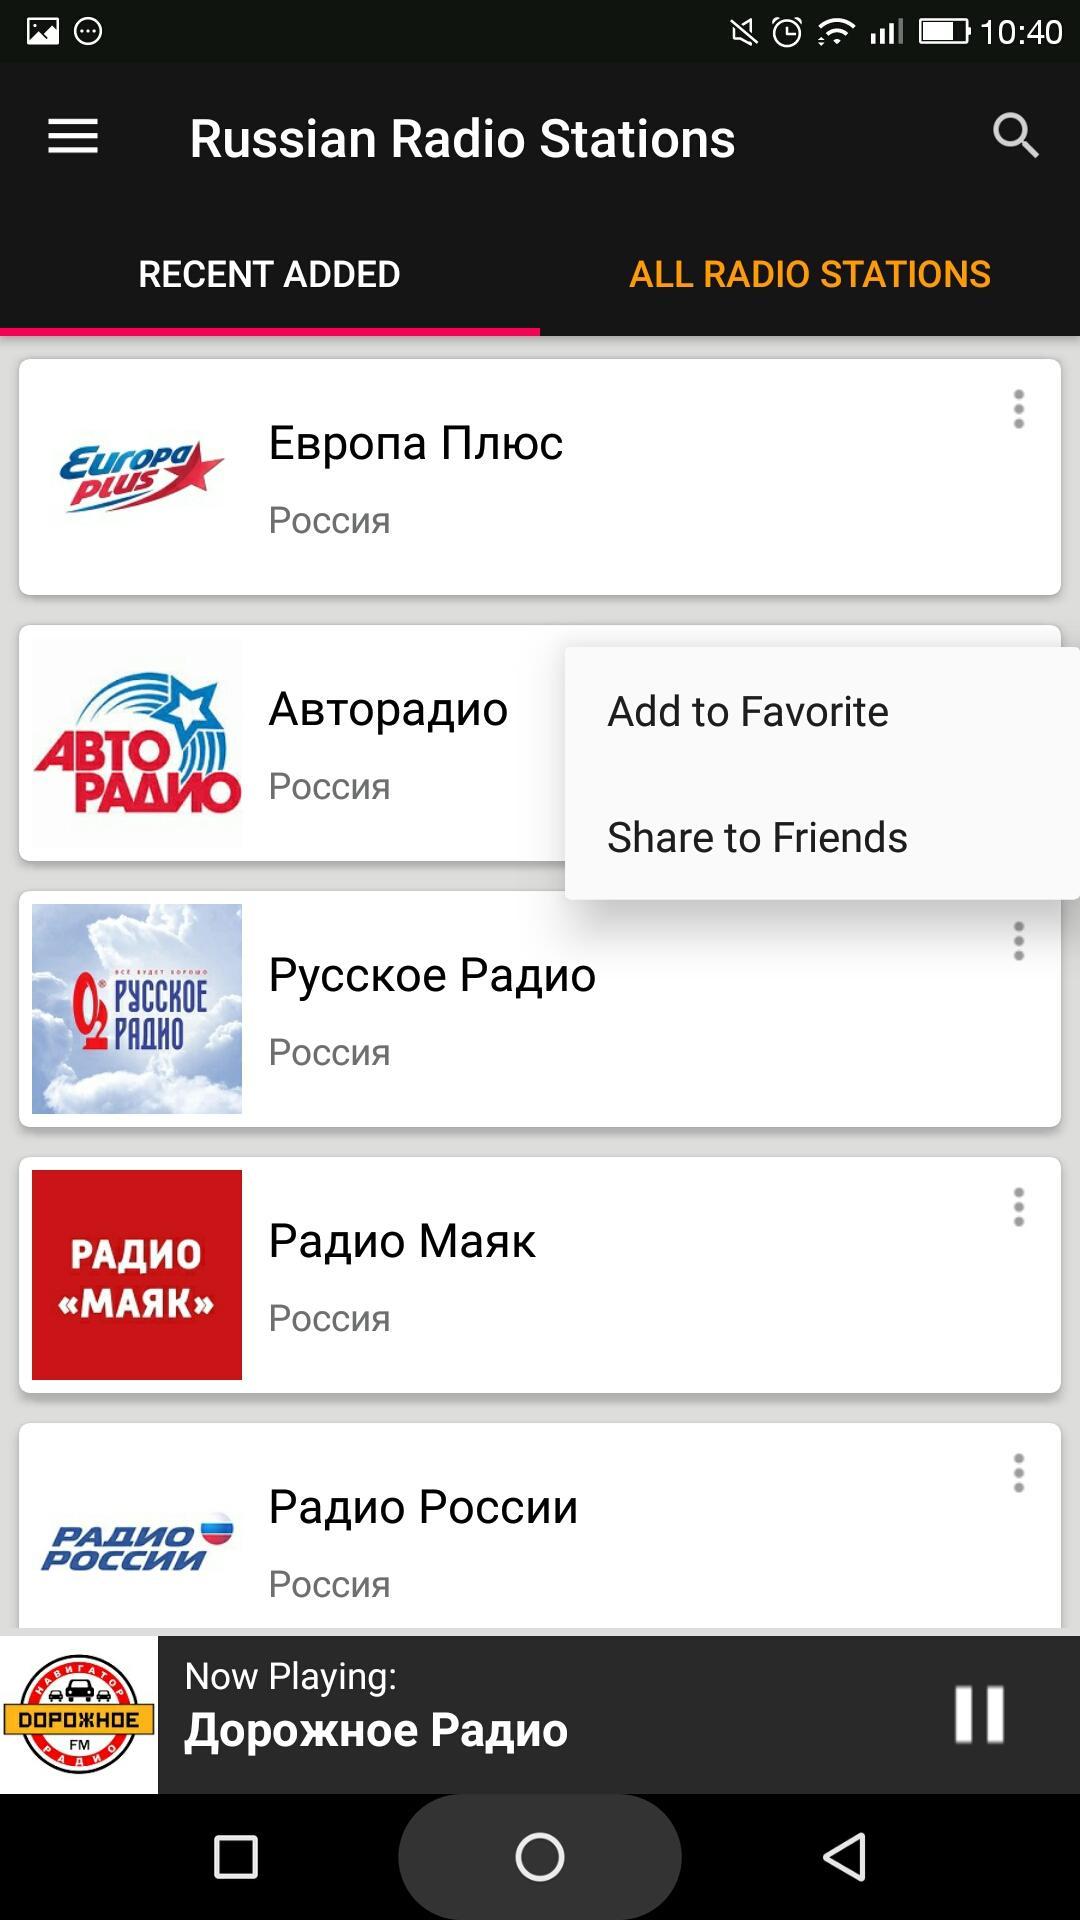 Russian Radio Stations 6.0.2 Screenshot 2